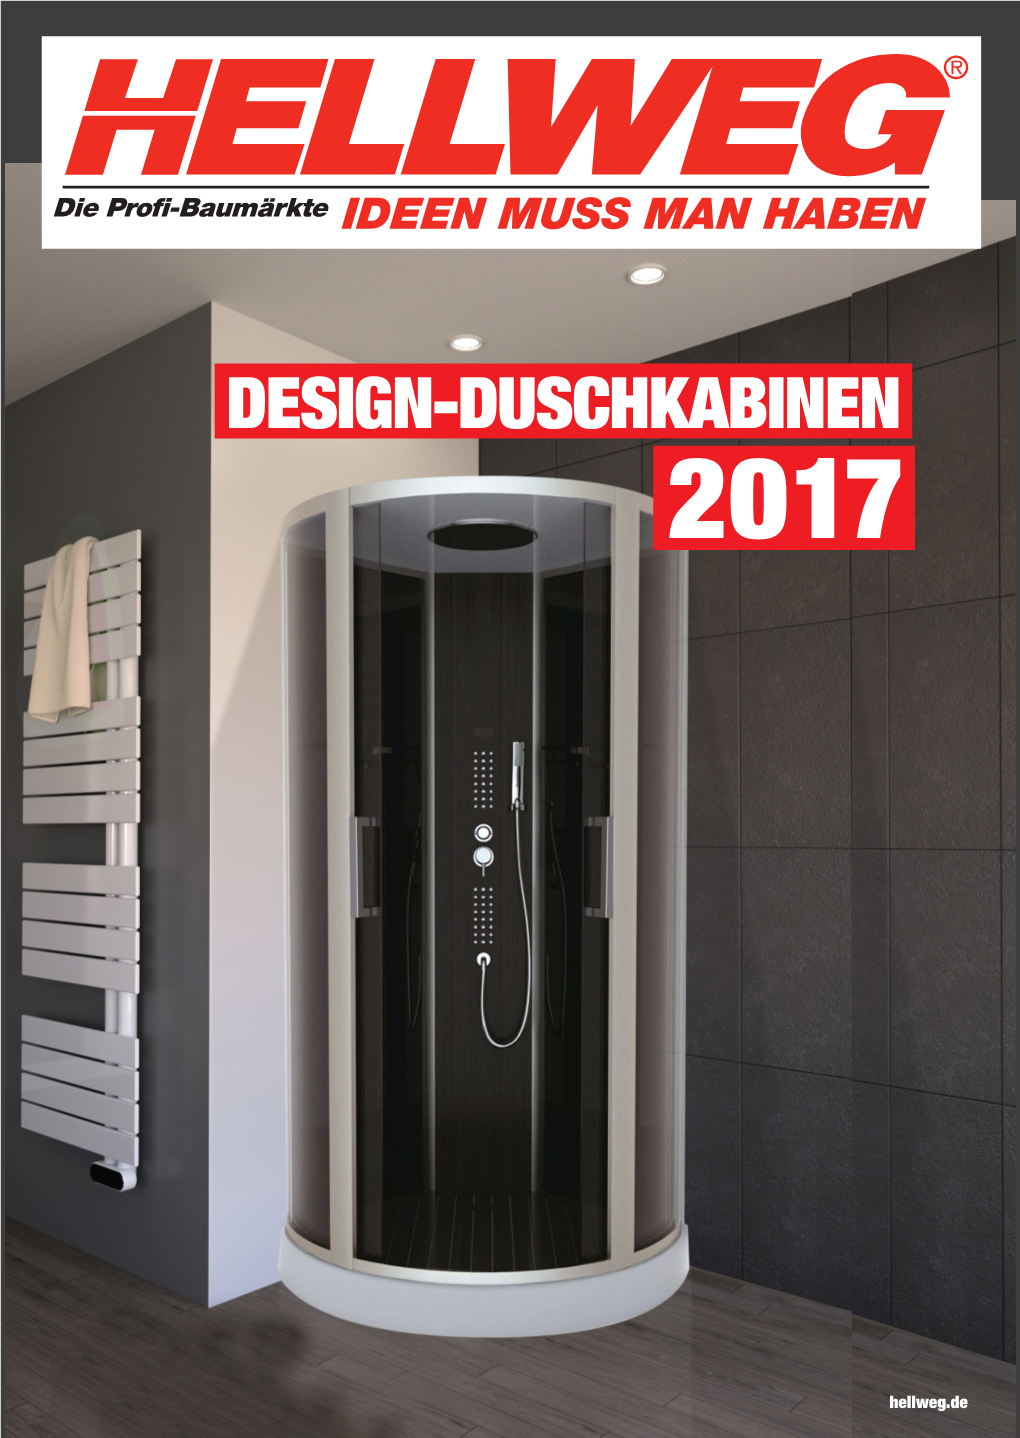 Design-Duschkabinen 2017